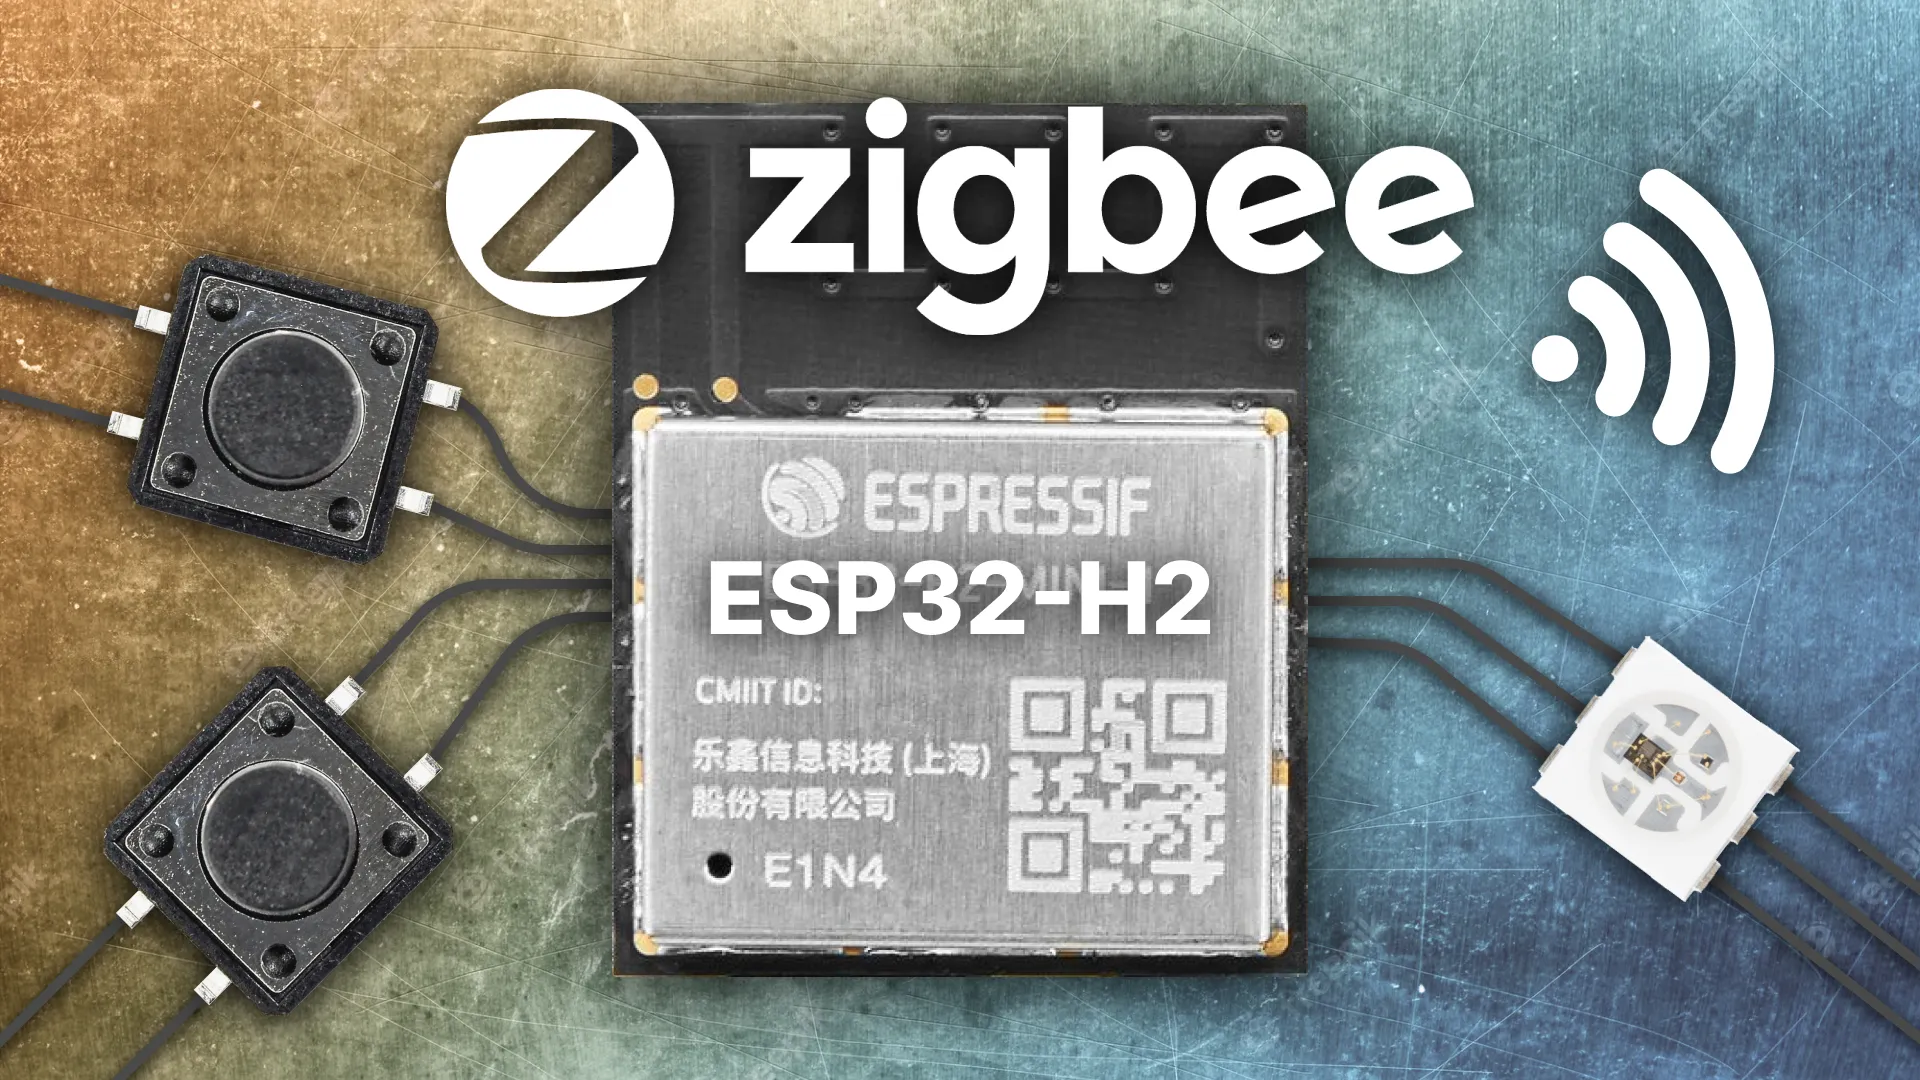 esp32h2-zigbee